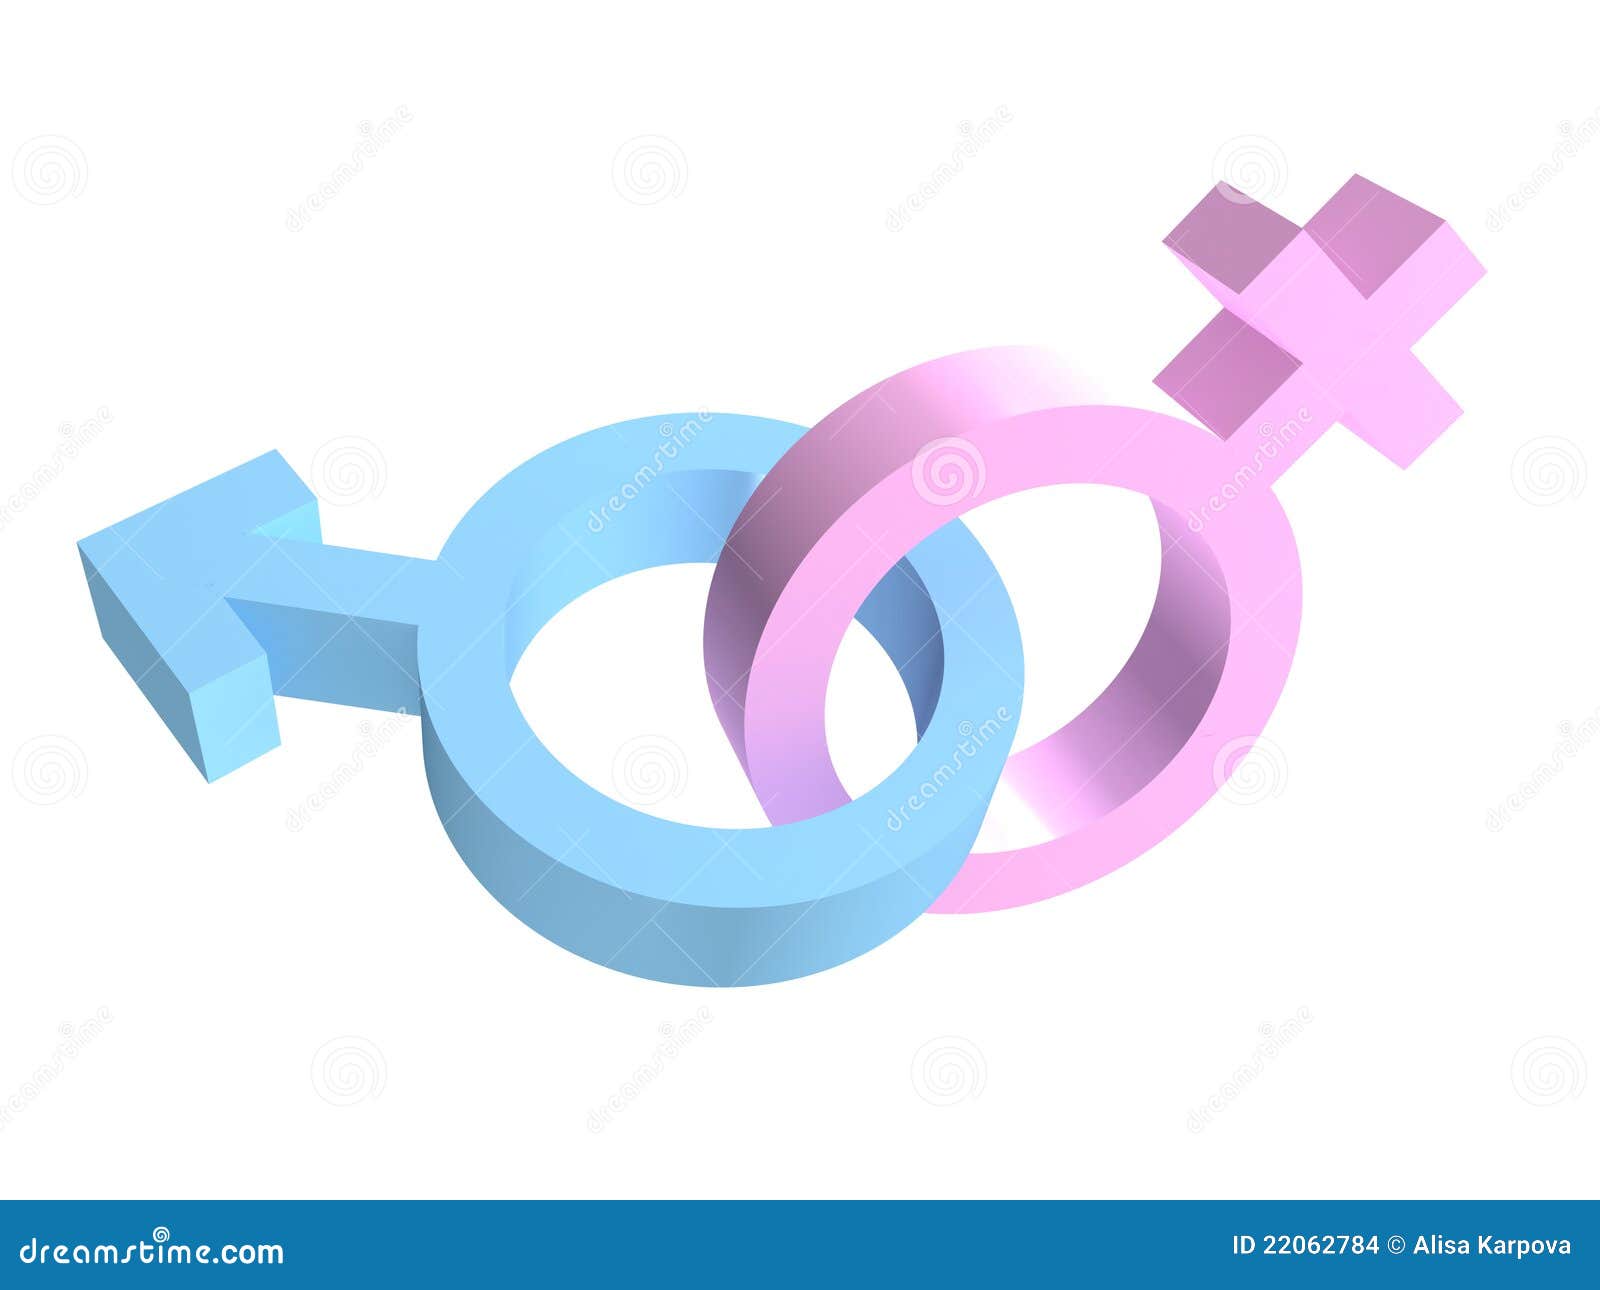 Two Crossed Gender Sex Signs Stock Illustration Illustration Of Arrow